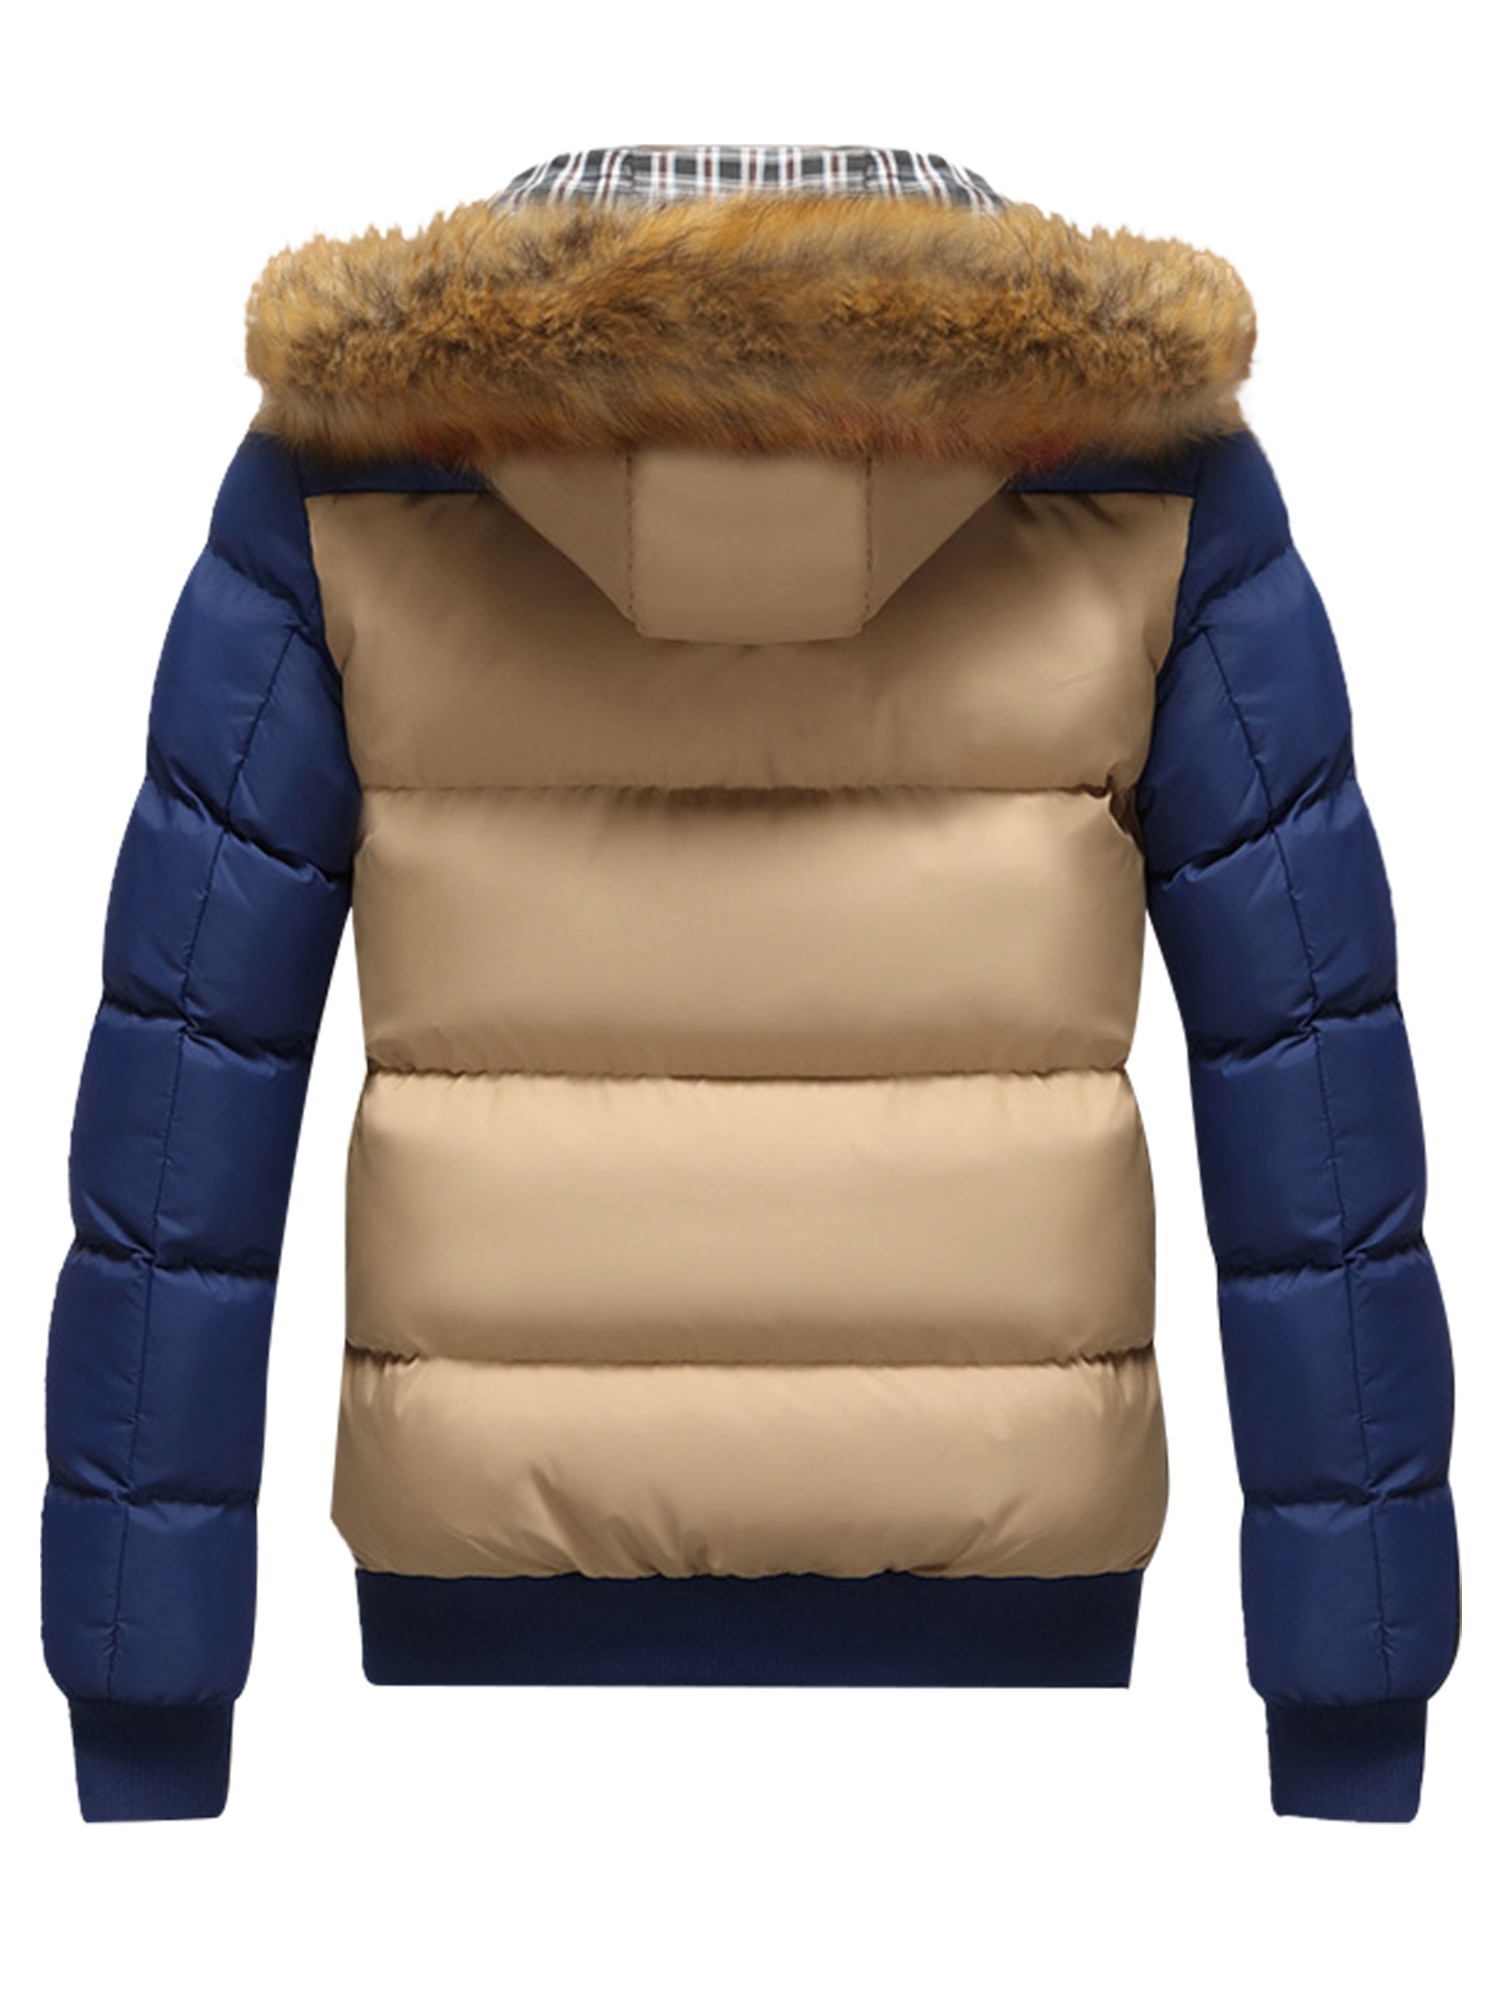 Plus Size Men Winter Warm Zipper Big Collar Hooded Coat Jacket Contrast Color Long Sleeve Hoody Hooded Parka Jacket Outwear - image 3 of 3